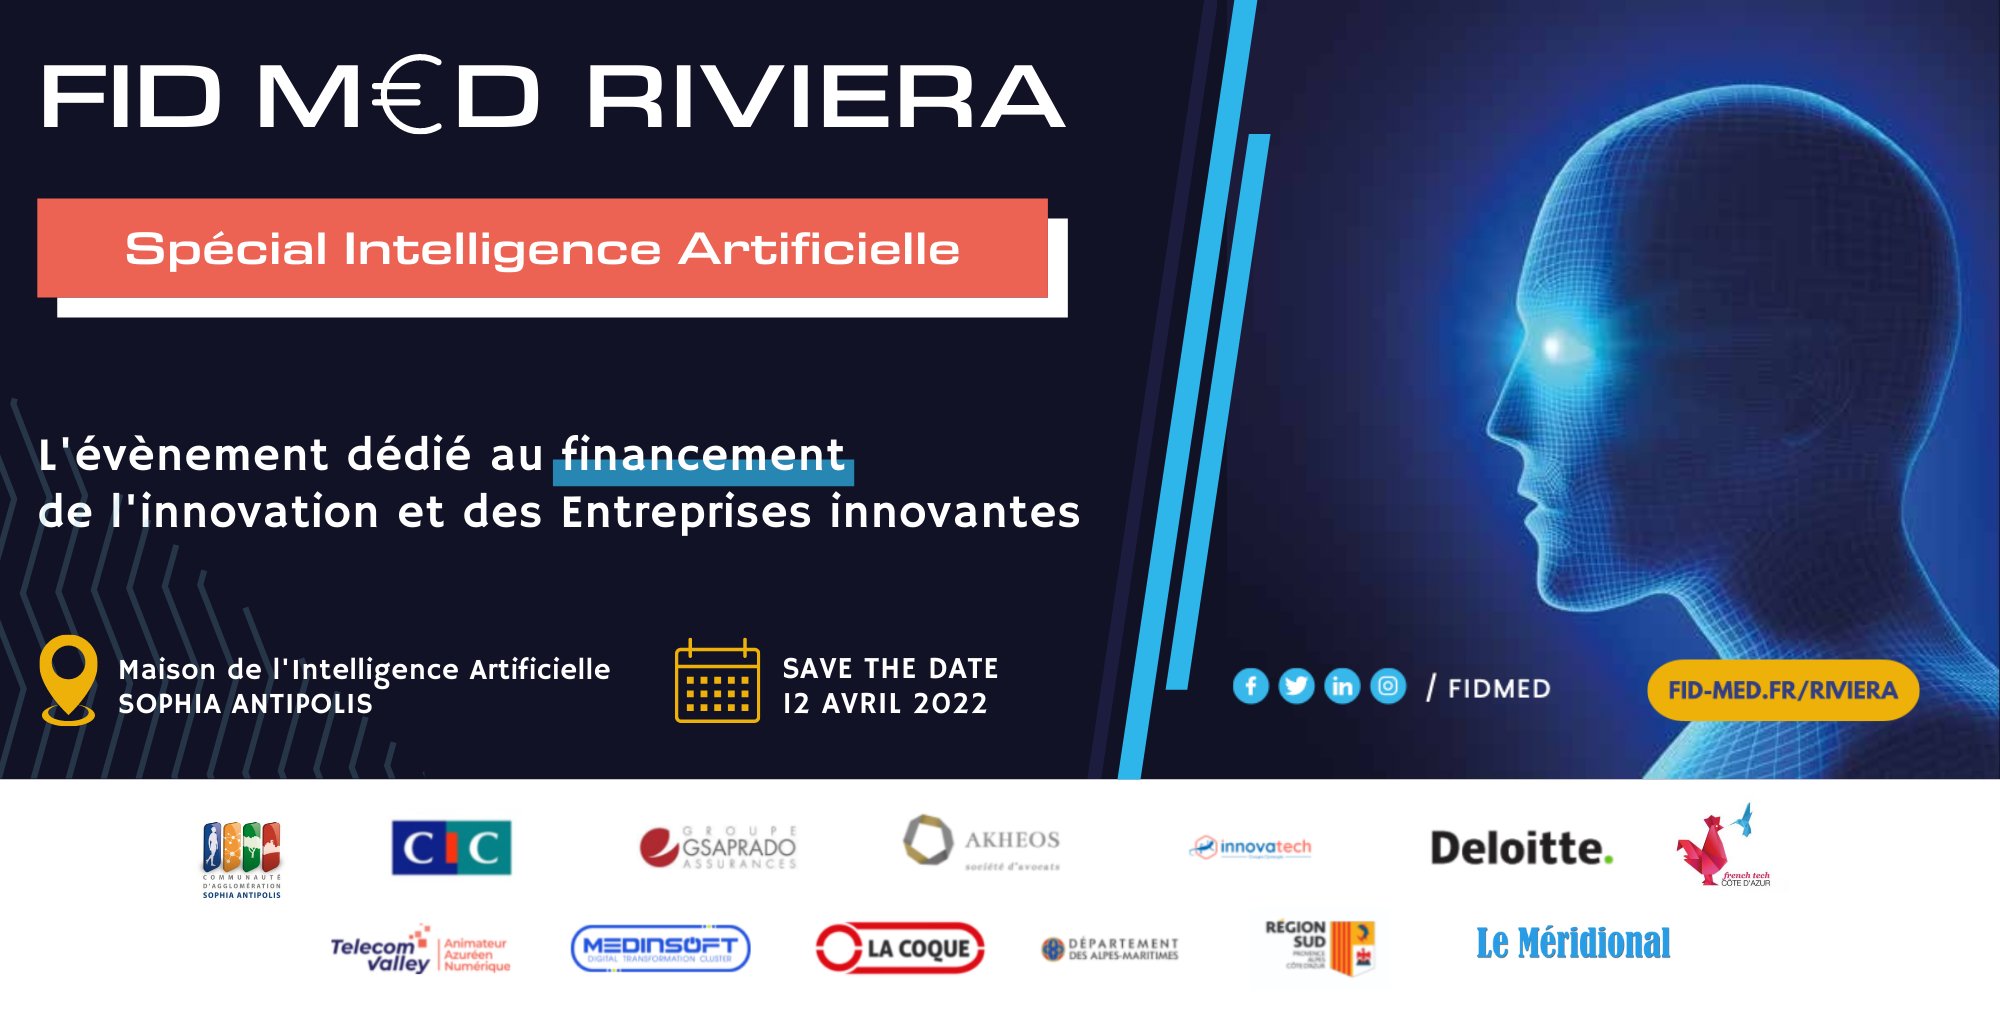 FIDMED Riviera 2022 : Appel aux startups dans l’Intelligence Artificielle